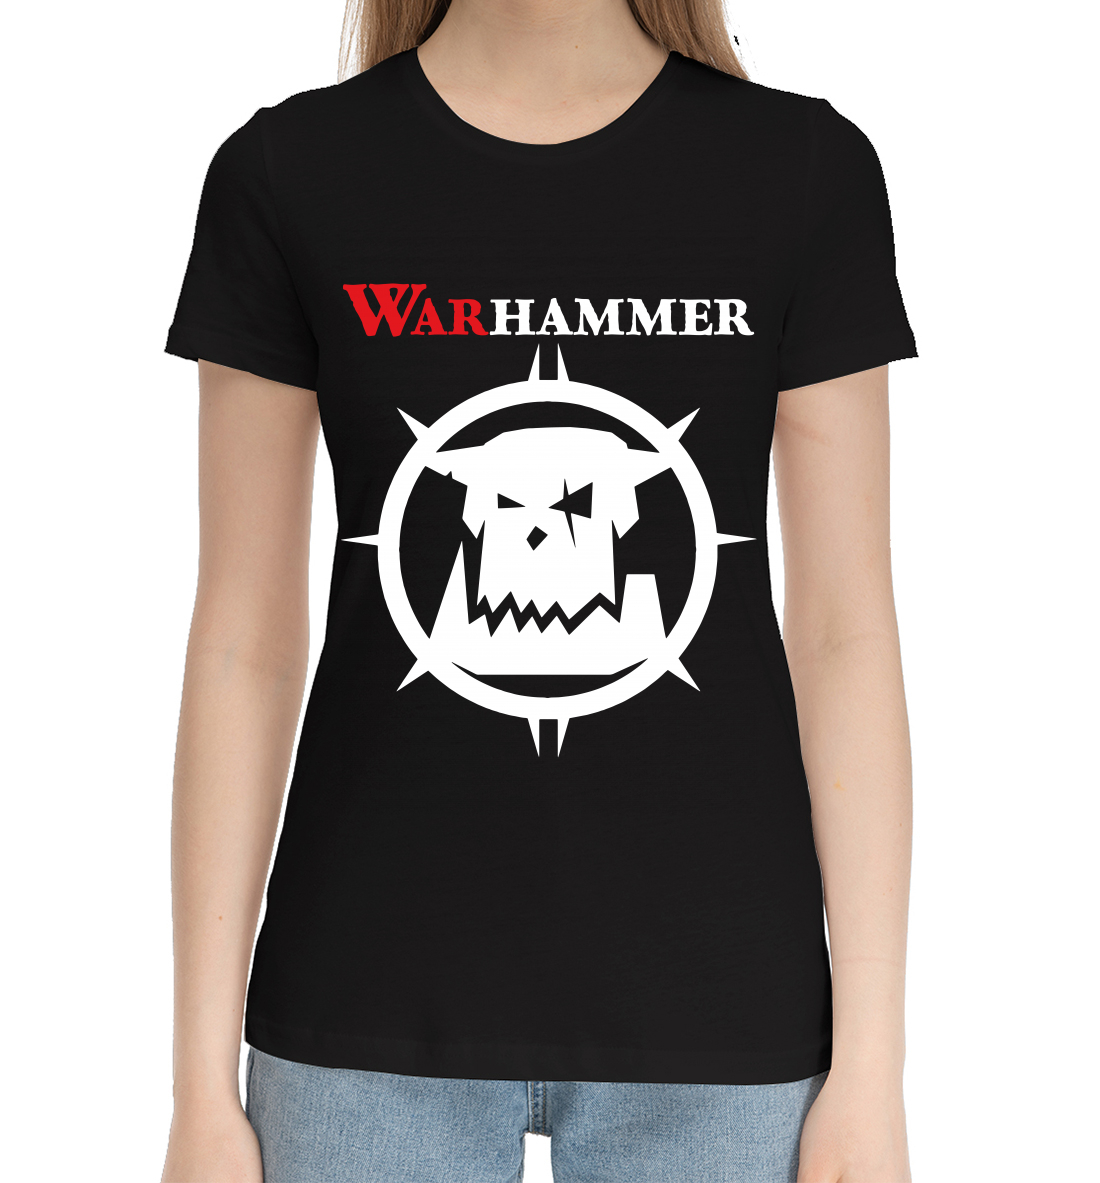 Женская Хлопковая футболка с принтом Warhammer, артикул WHR-439141-hfu-1mp